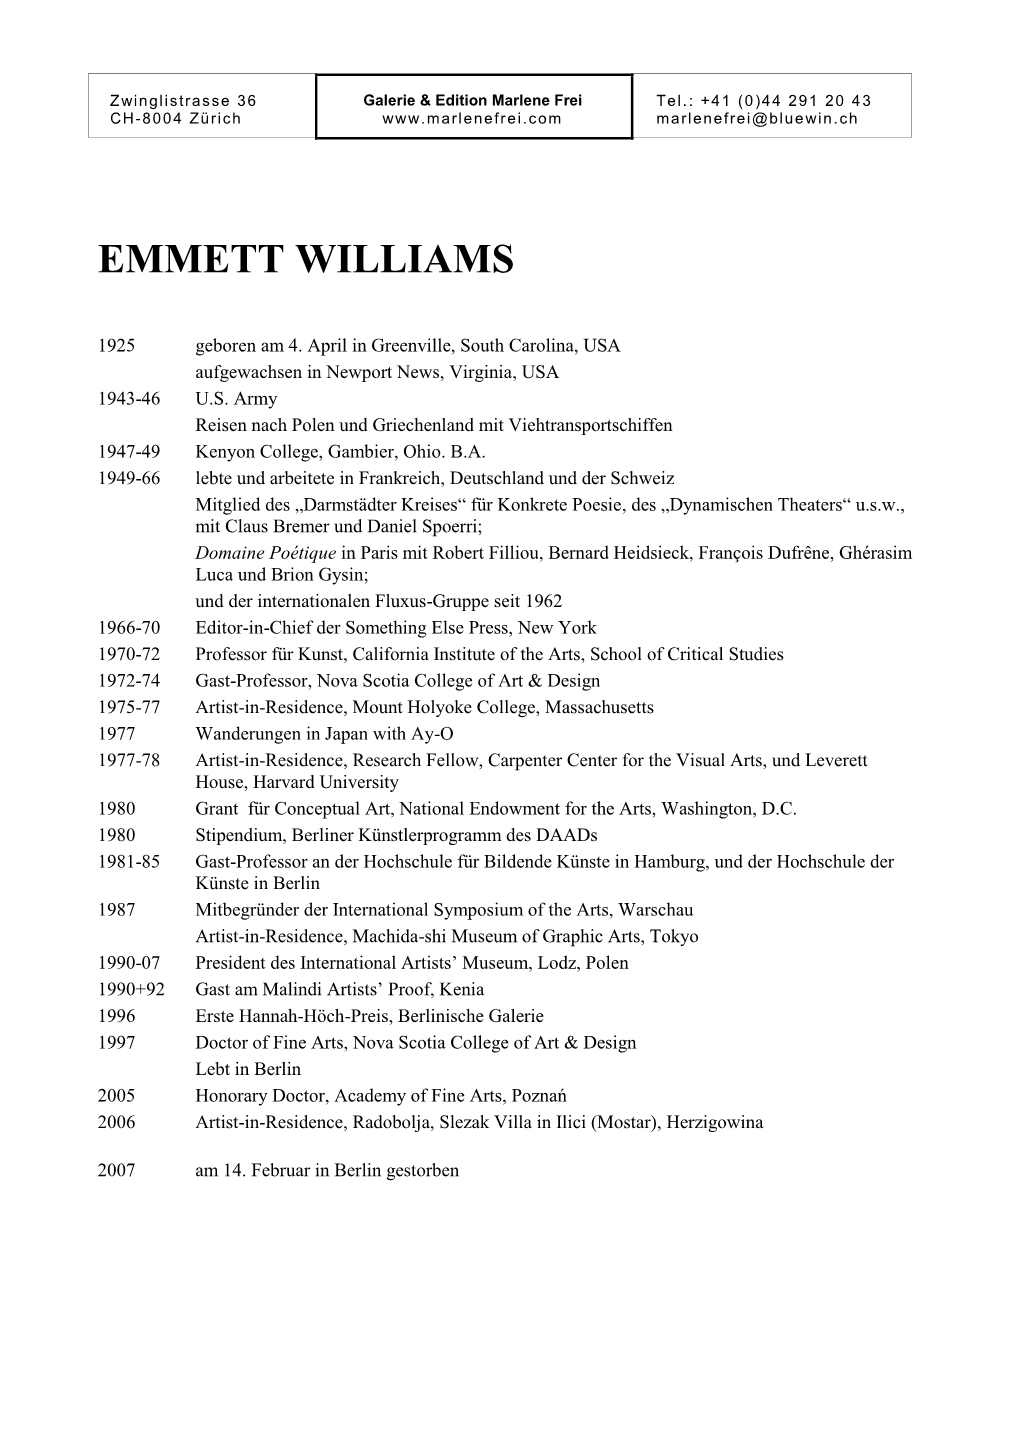 Emmett Williams